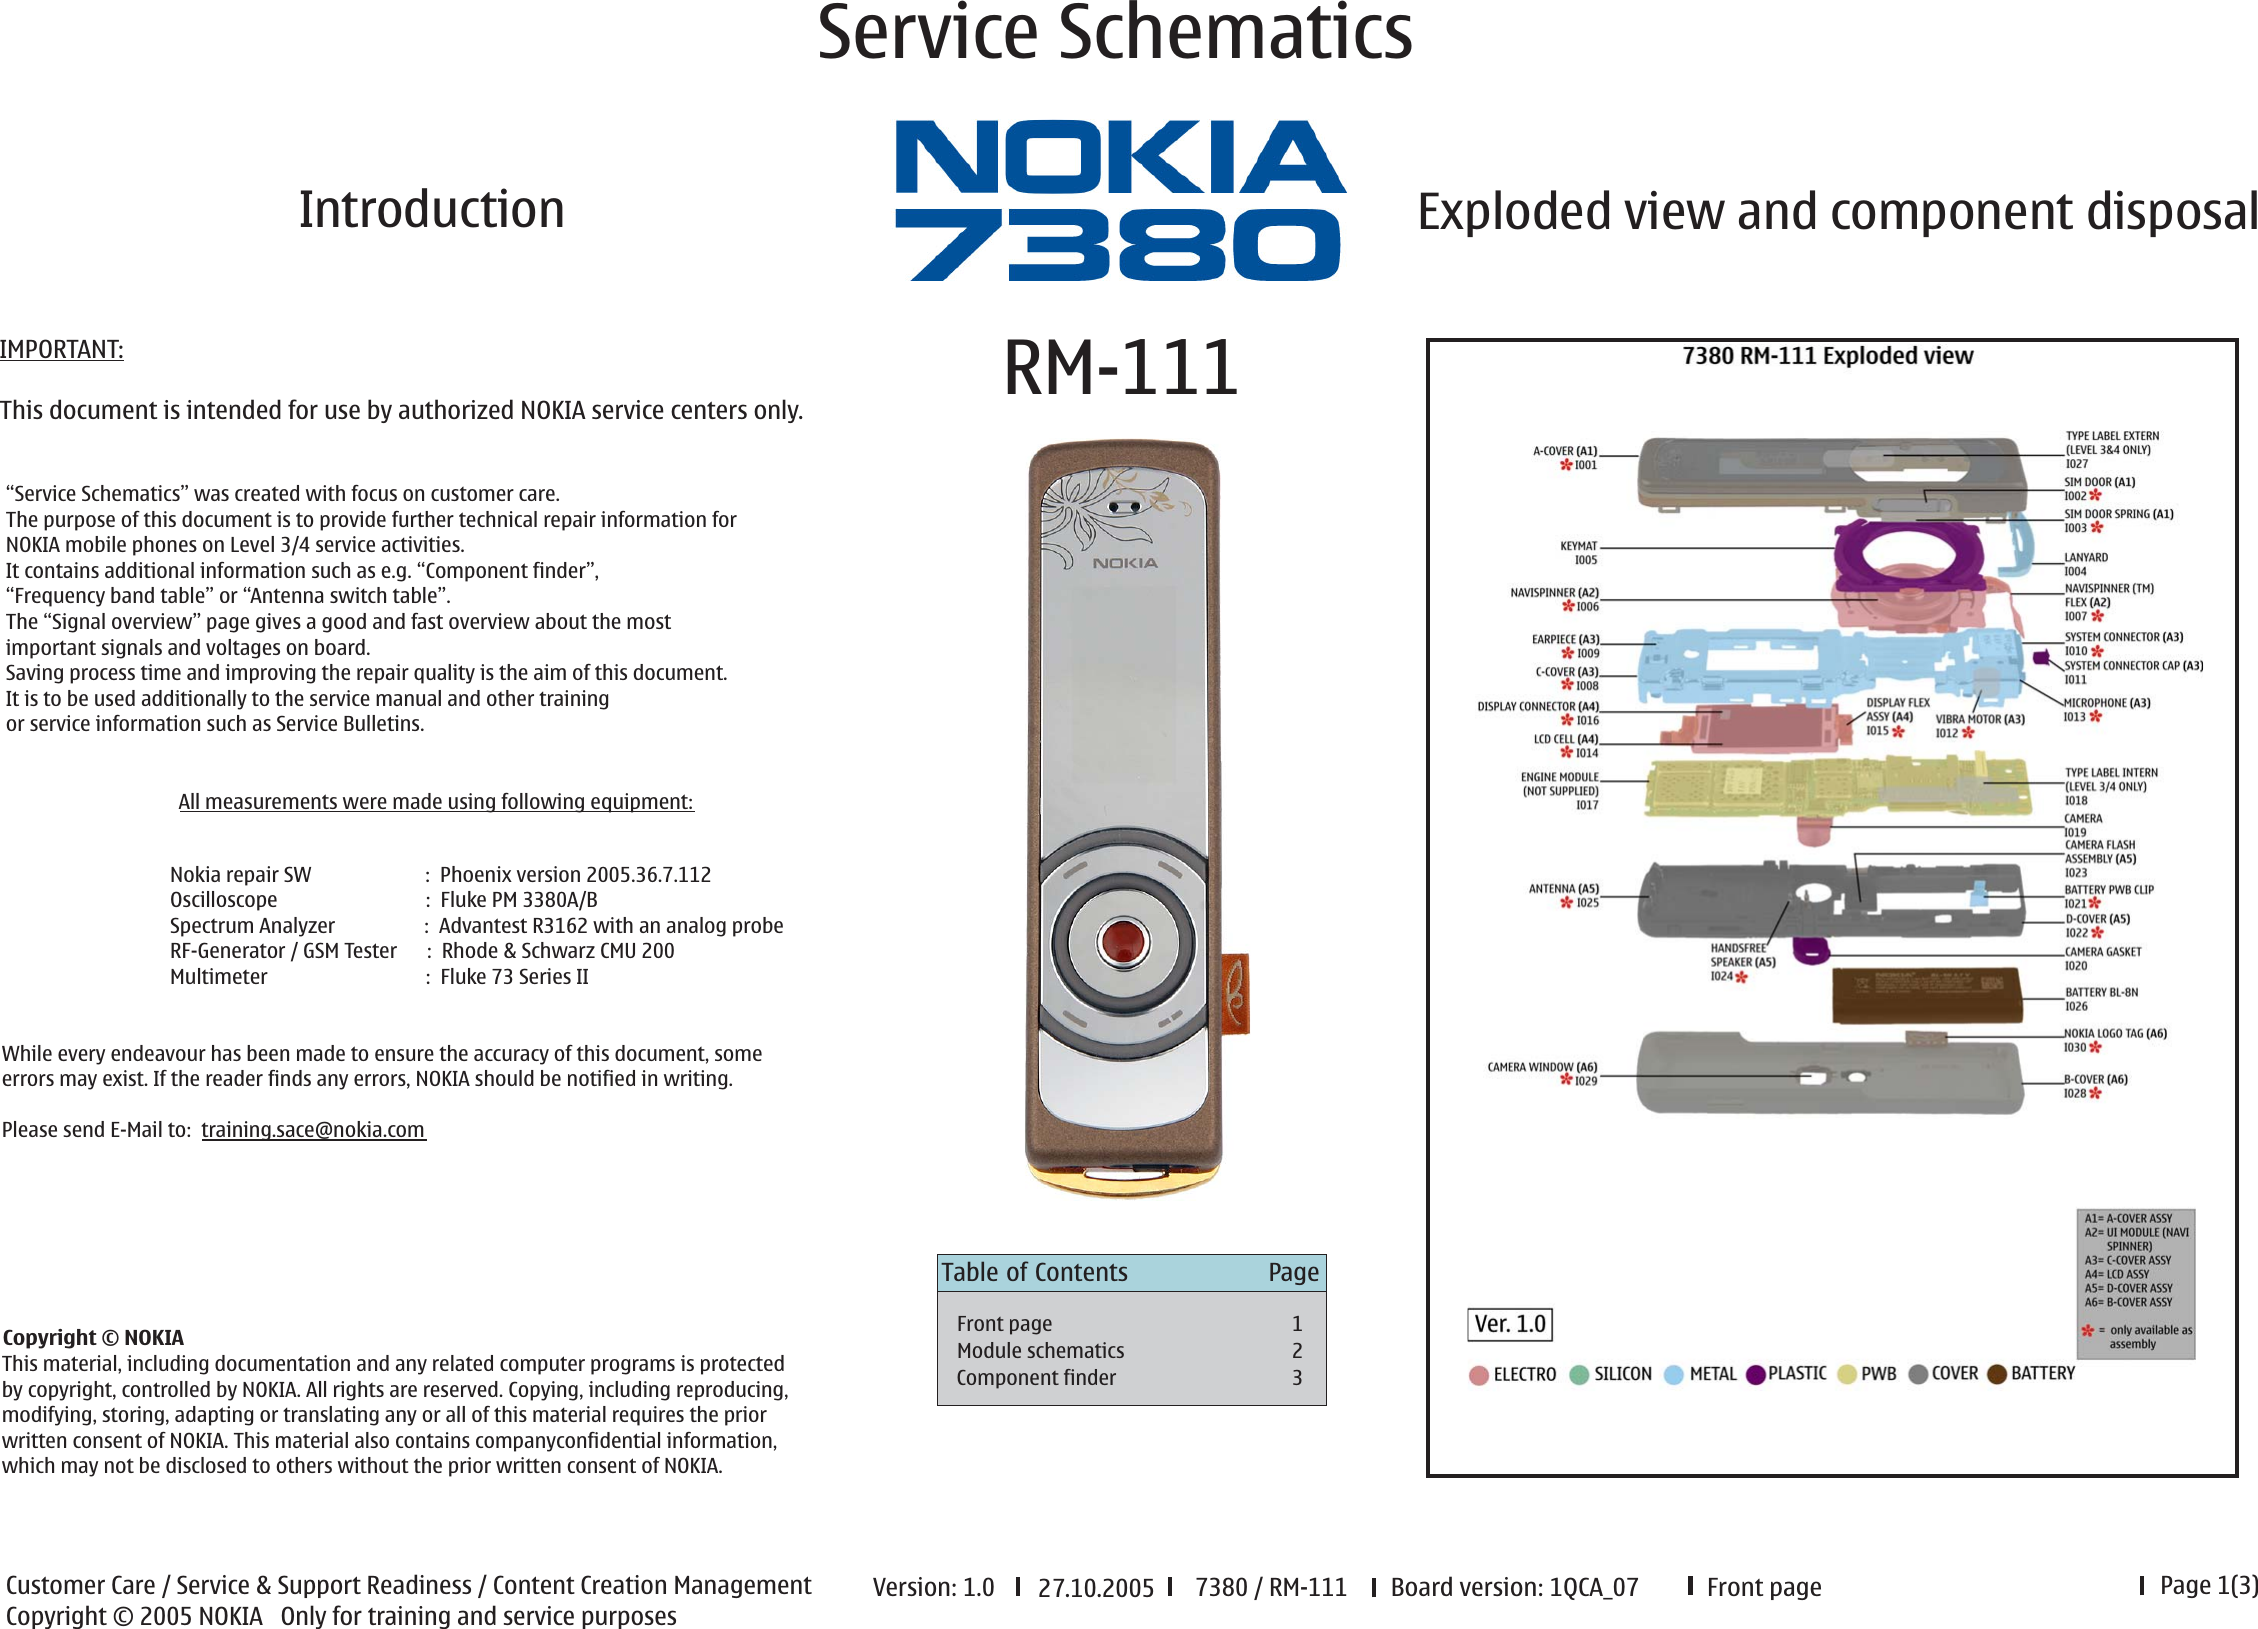 Page 1 of 3 - Paris2 Nokia 7380 Rm-111 Service Schematics V1